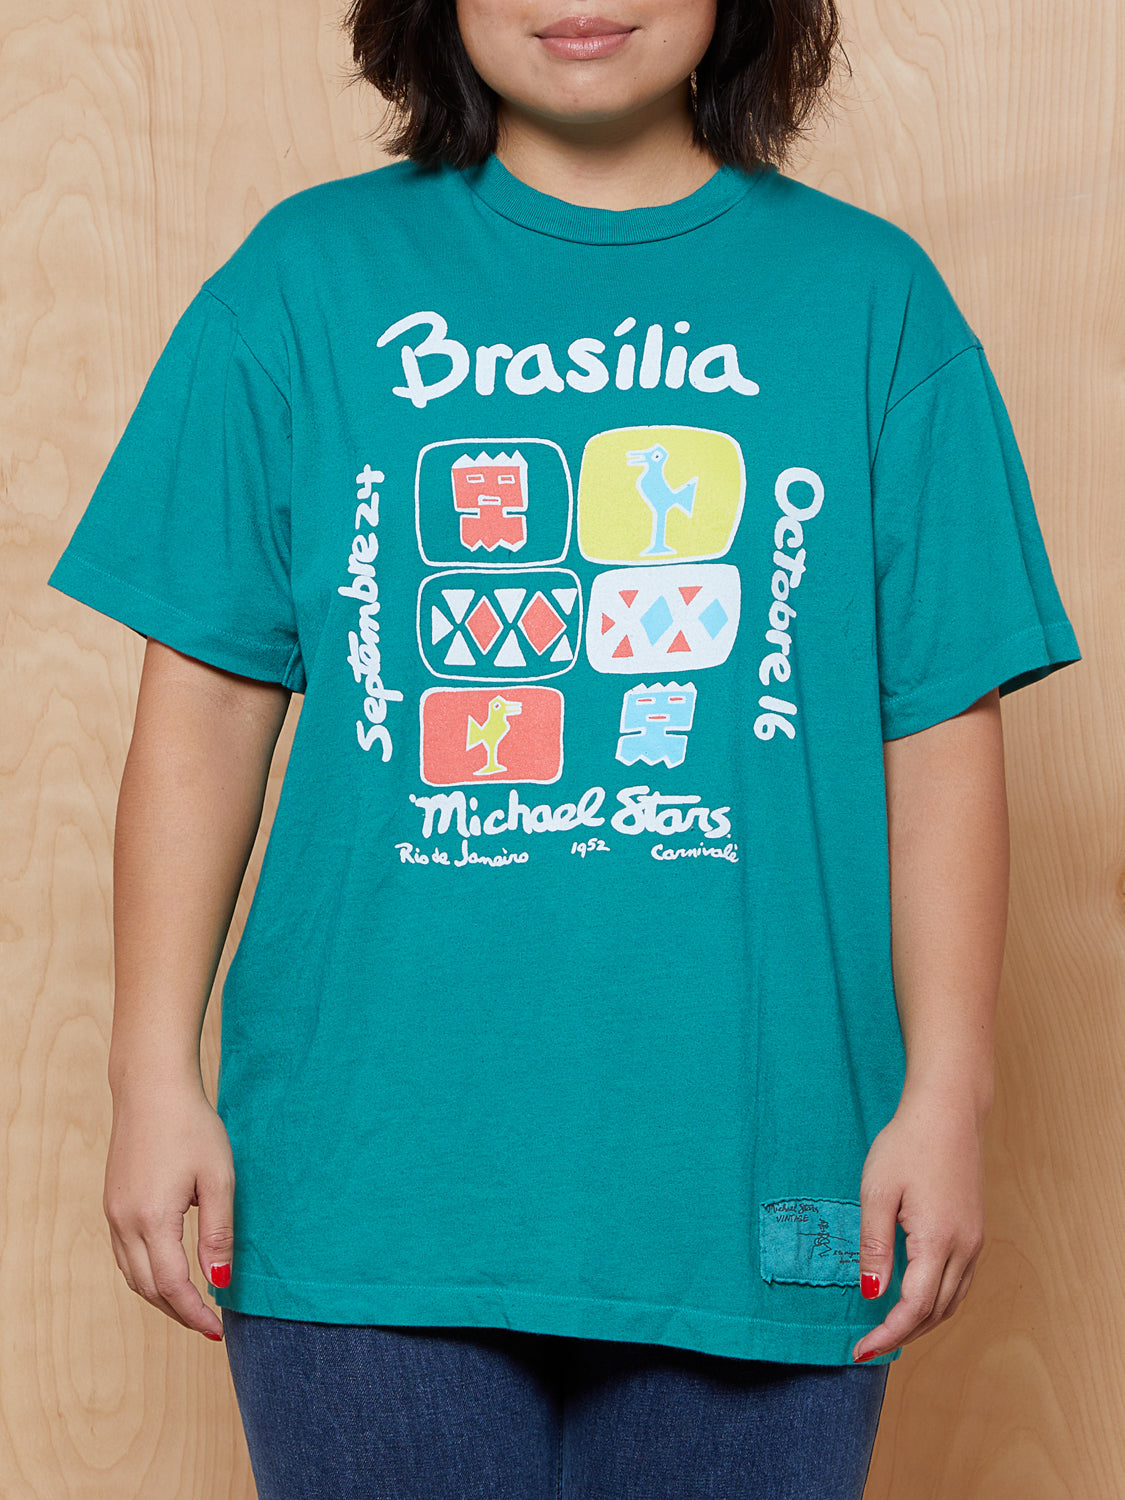 Michael Stars Vintage Inspired Brasilia T-Shirt